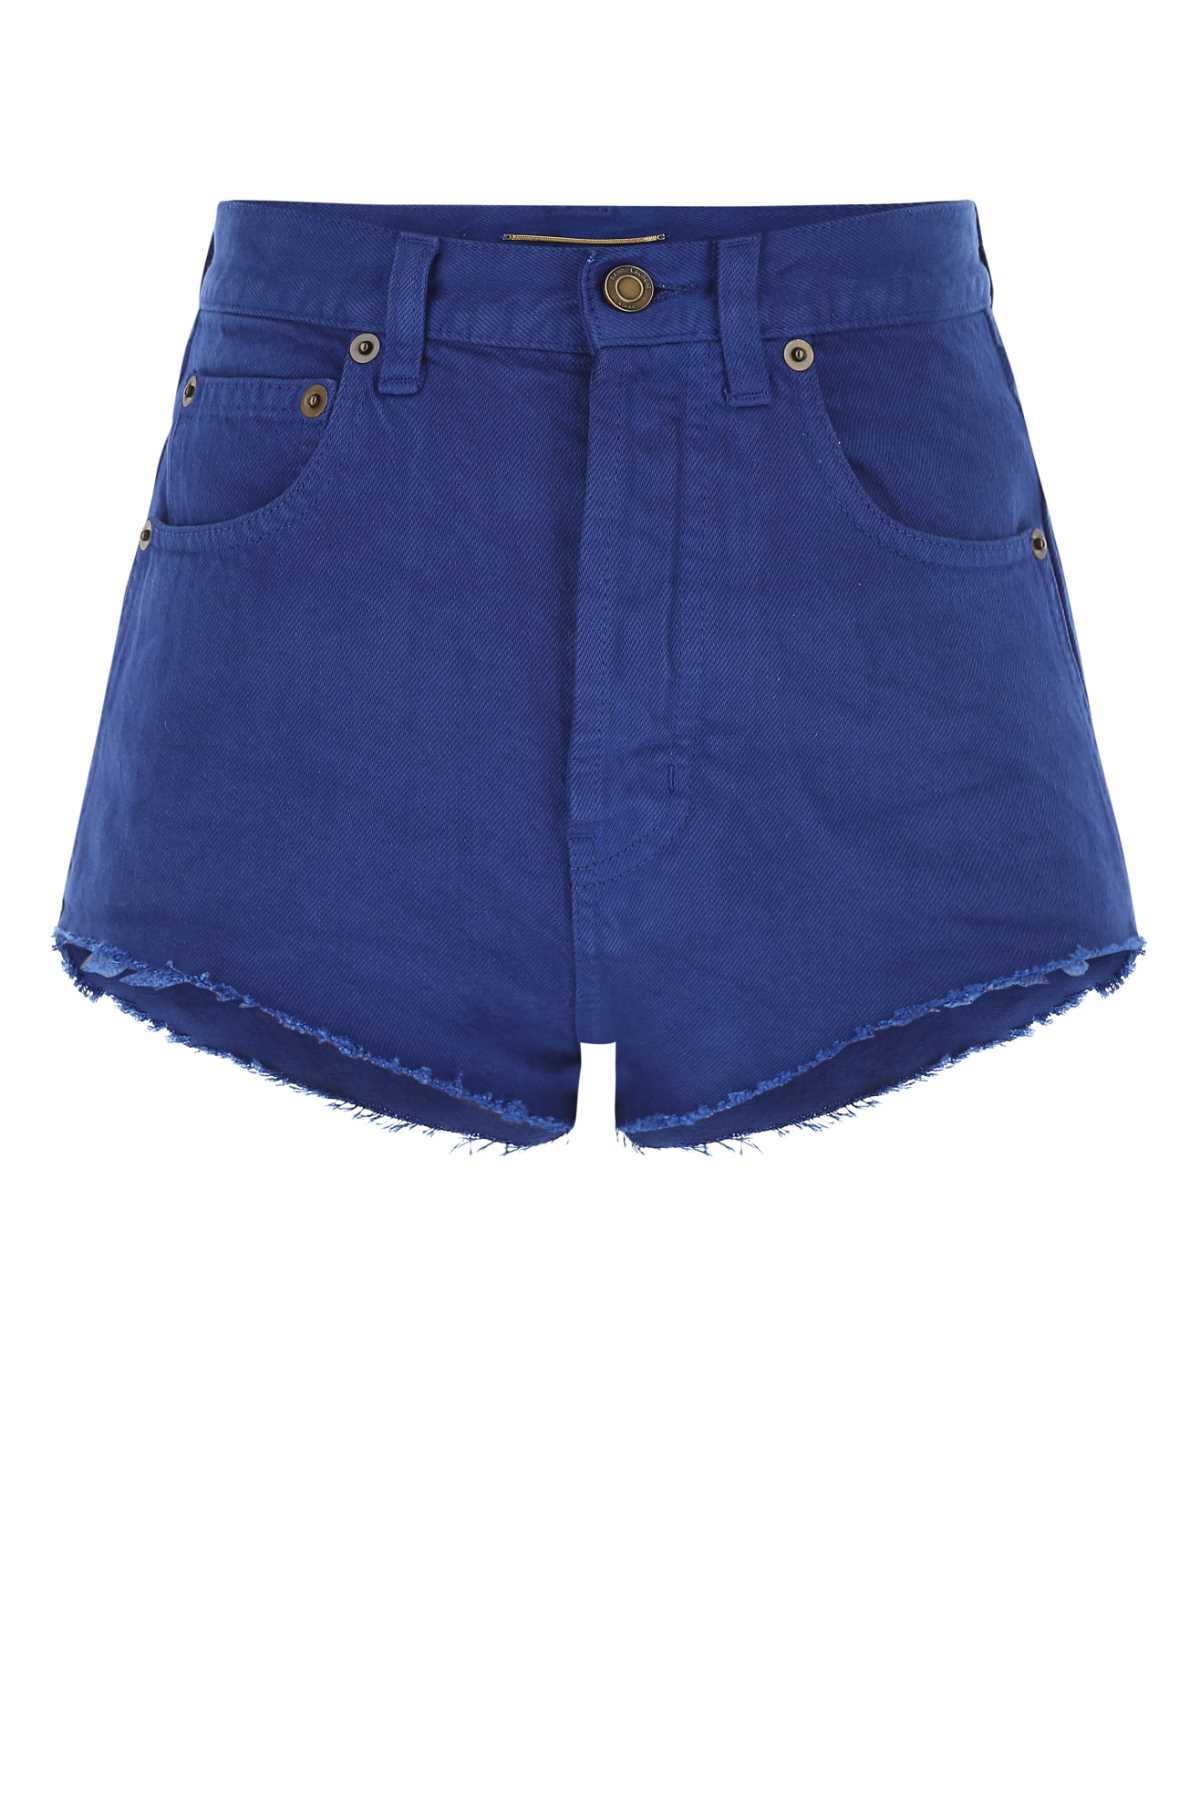 Electric Blue Denim Shorts